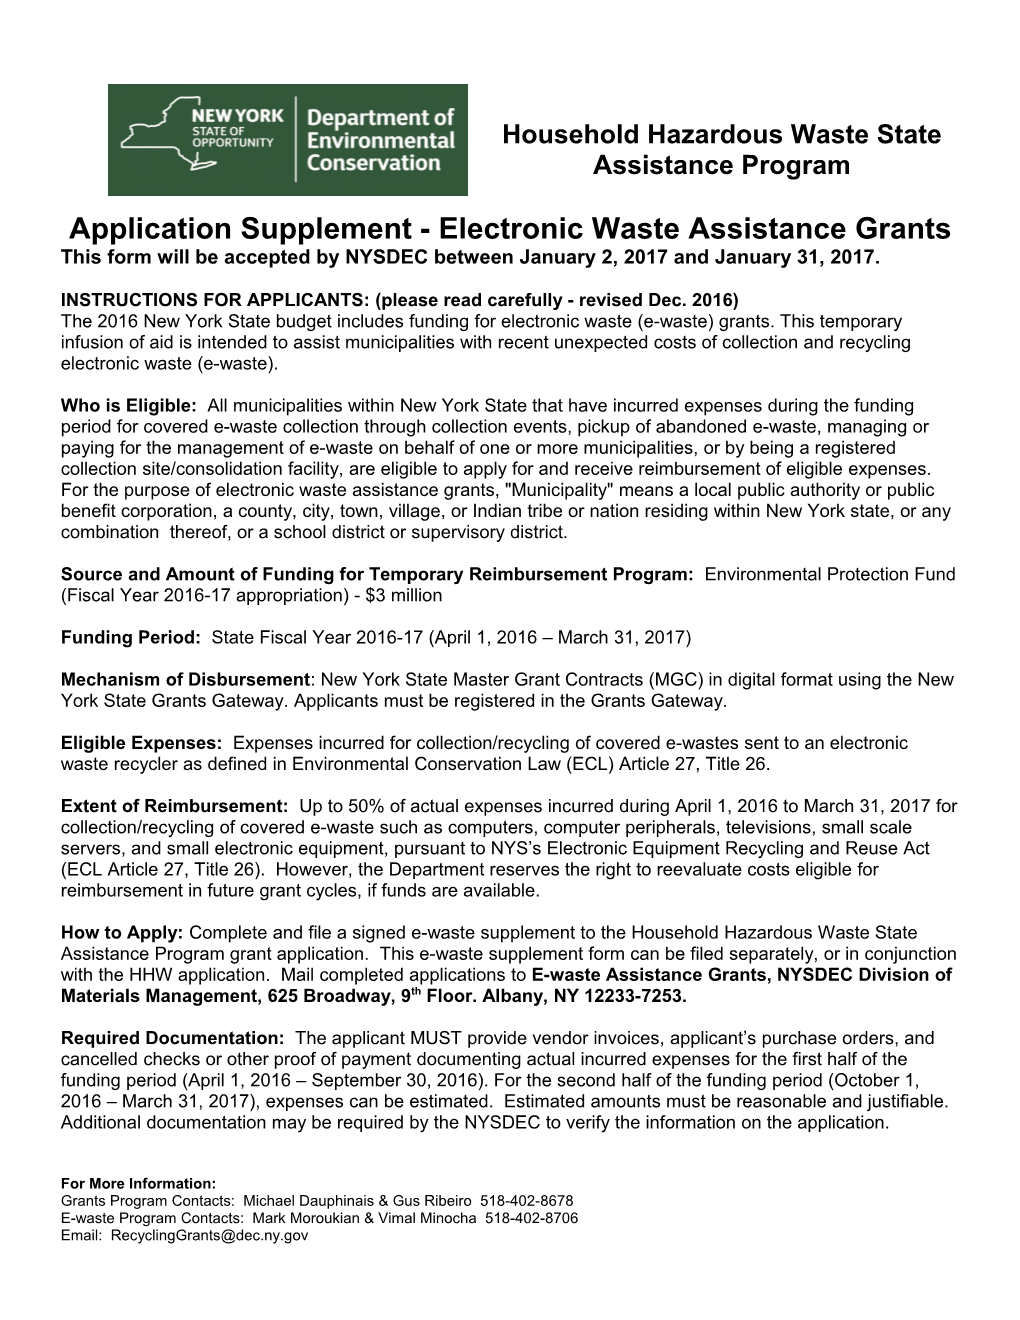 Household Hazardous Waste State Assistance Program